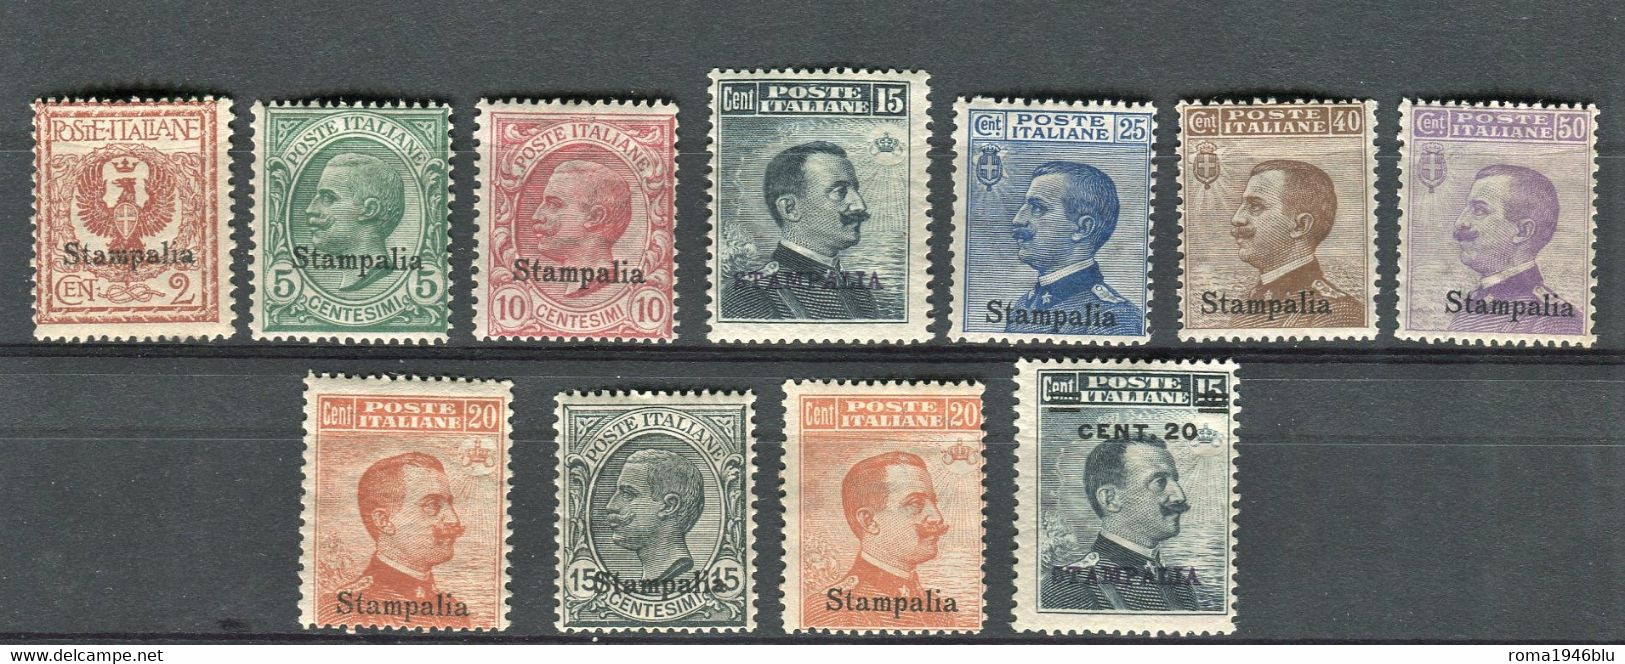 EGEO STAMPALIA 1912/1922 SERIE CPL. 11 V. * GOMMA ORIGINALE TOTALE CAT. 464,40 - Egeo (Stampalia)